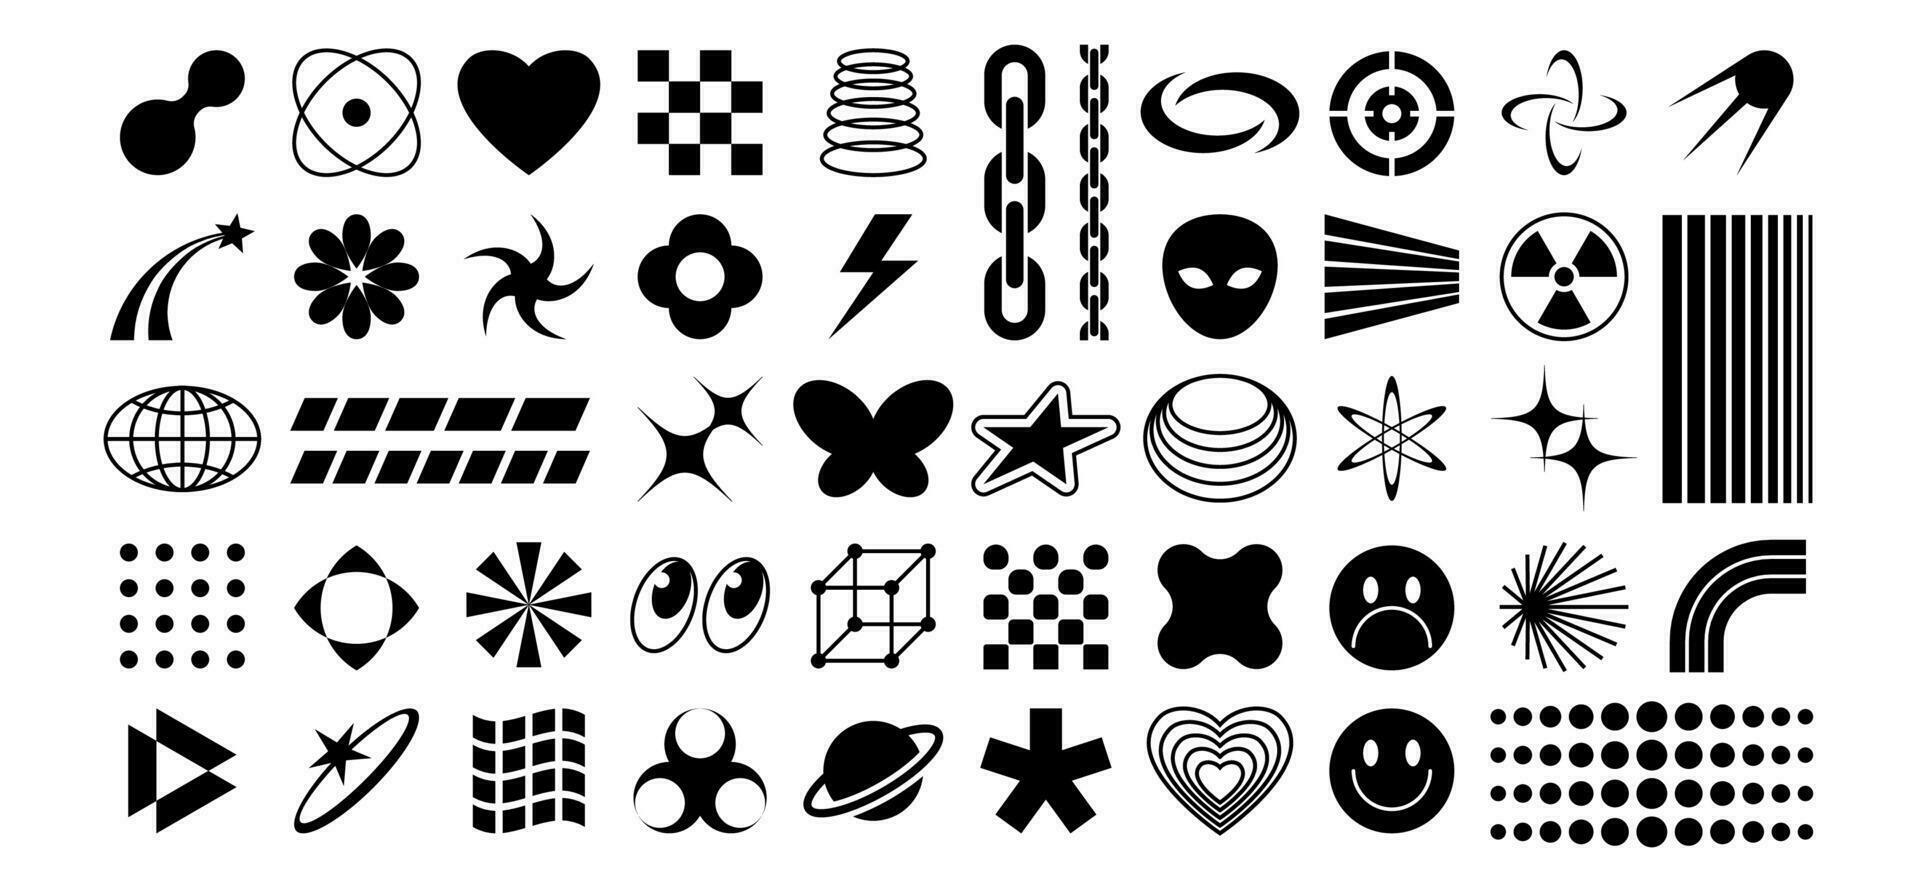 Y2k icons. 70s rave pop symbols, futuristic stars, planet and alien ...